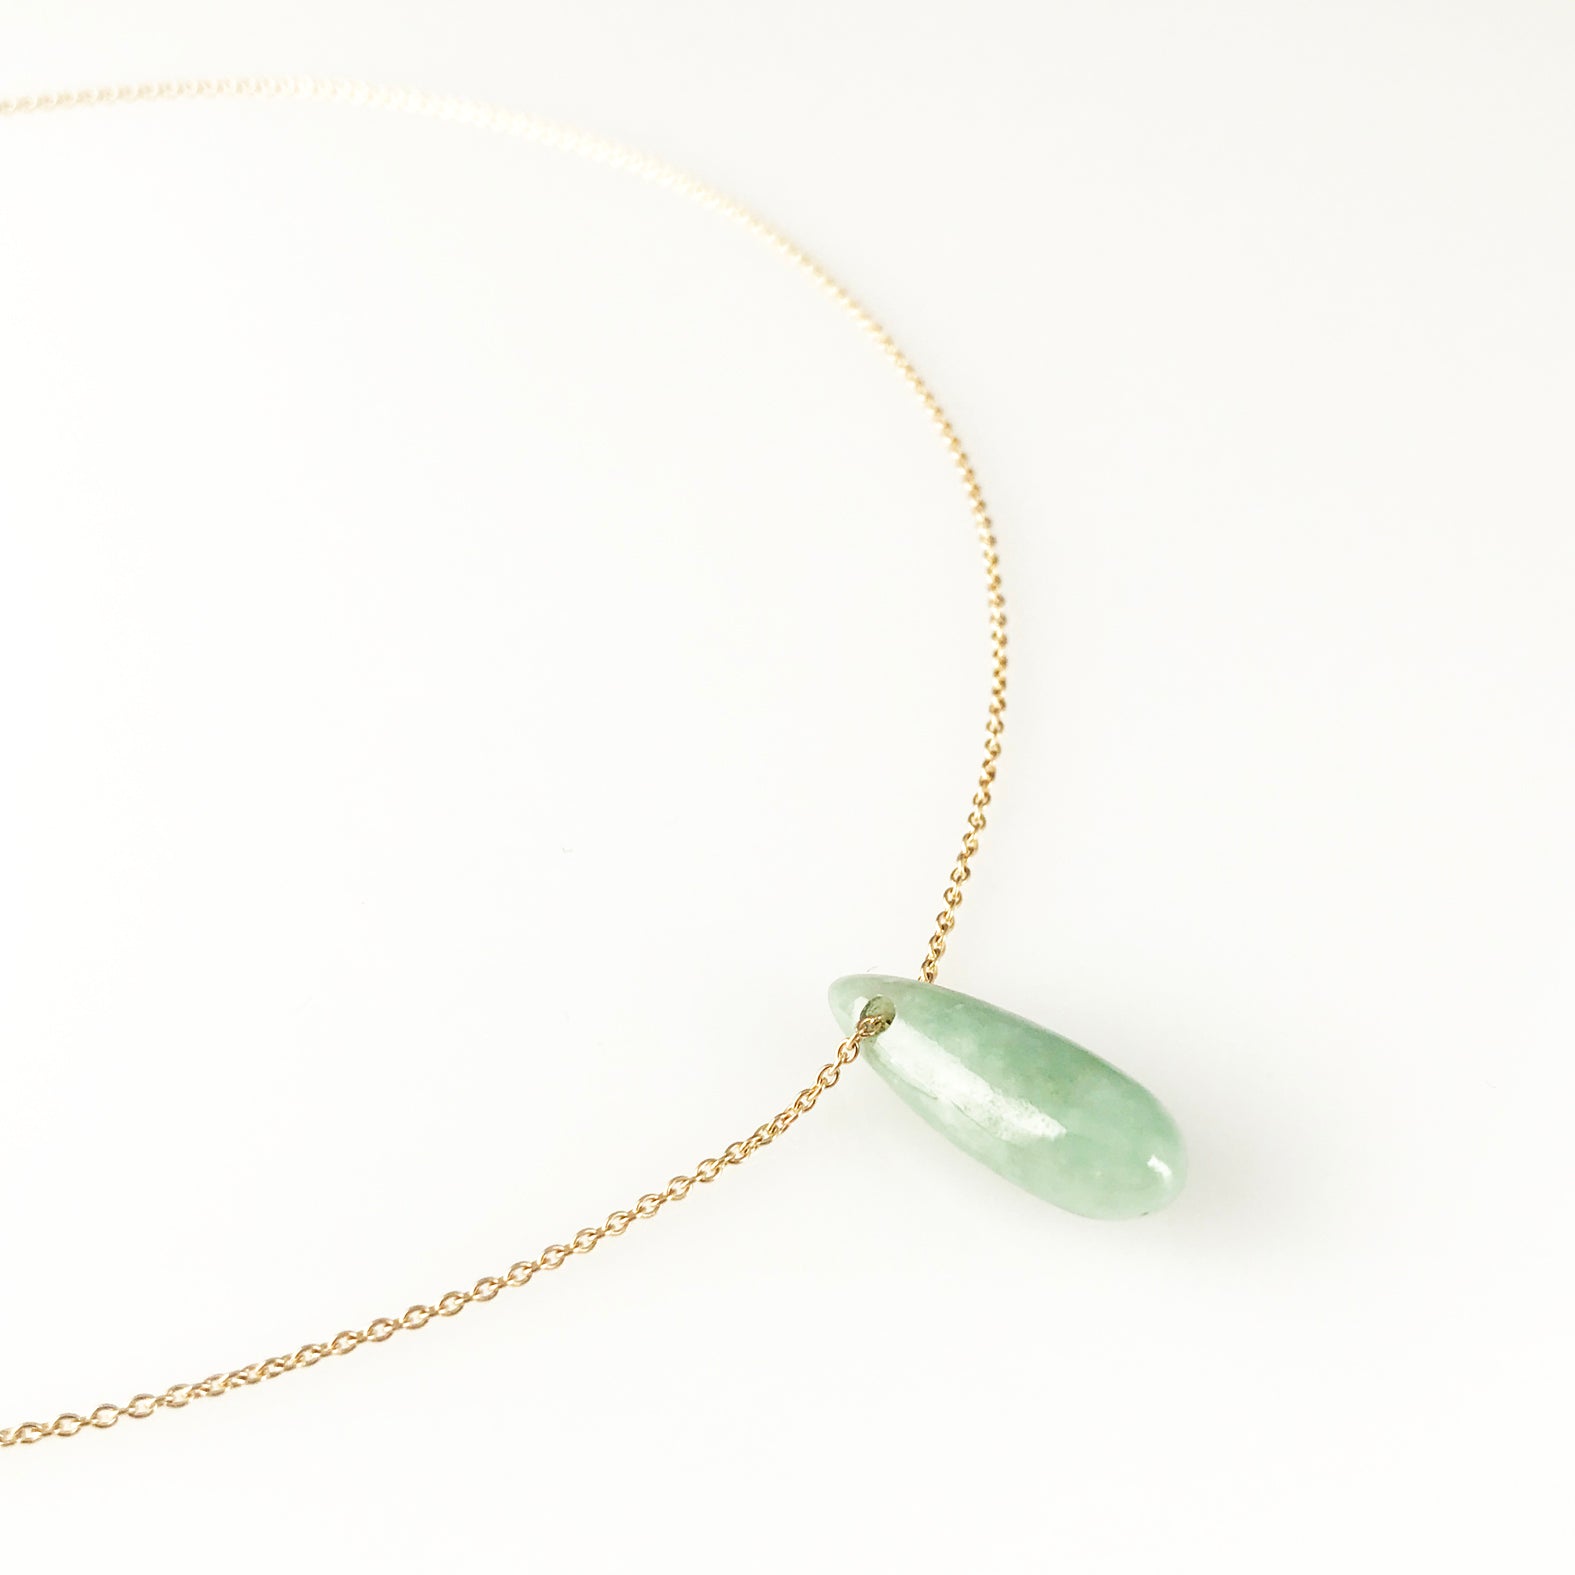 'Gem Amour'- Gold necklace with 'Tear drop' jade pendant